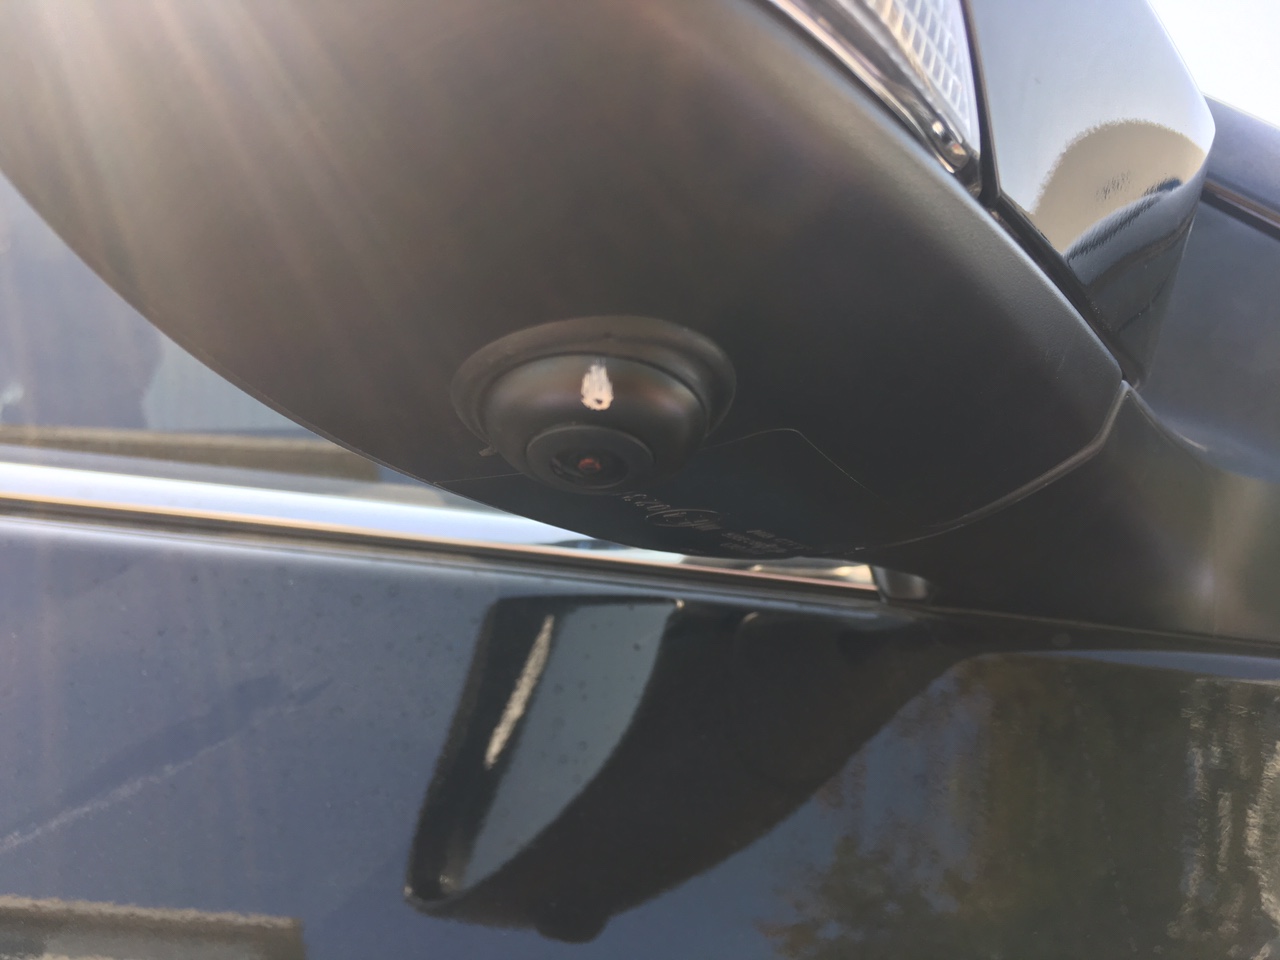 Camera 360 độ Oris lắp trên xe Toyota Corolla Altis 2018